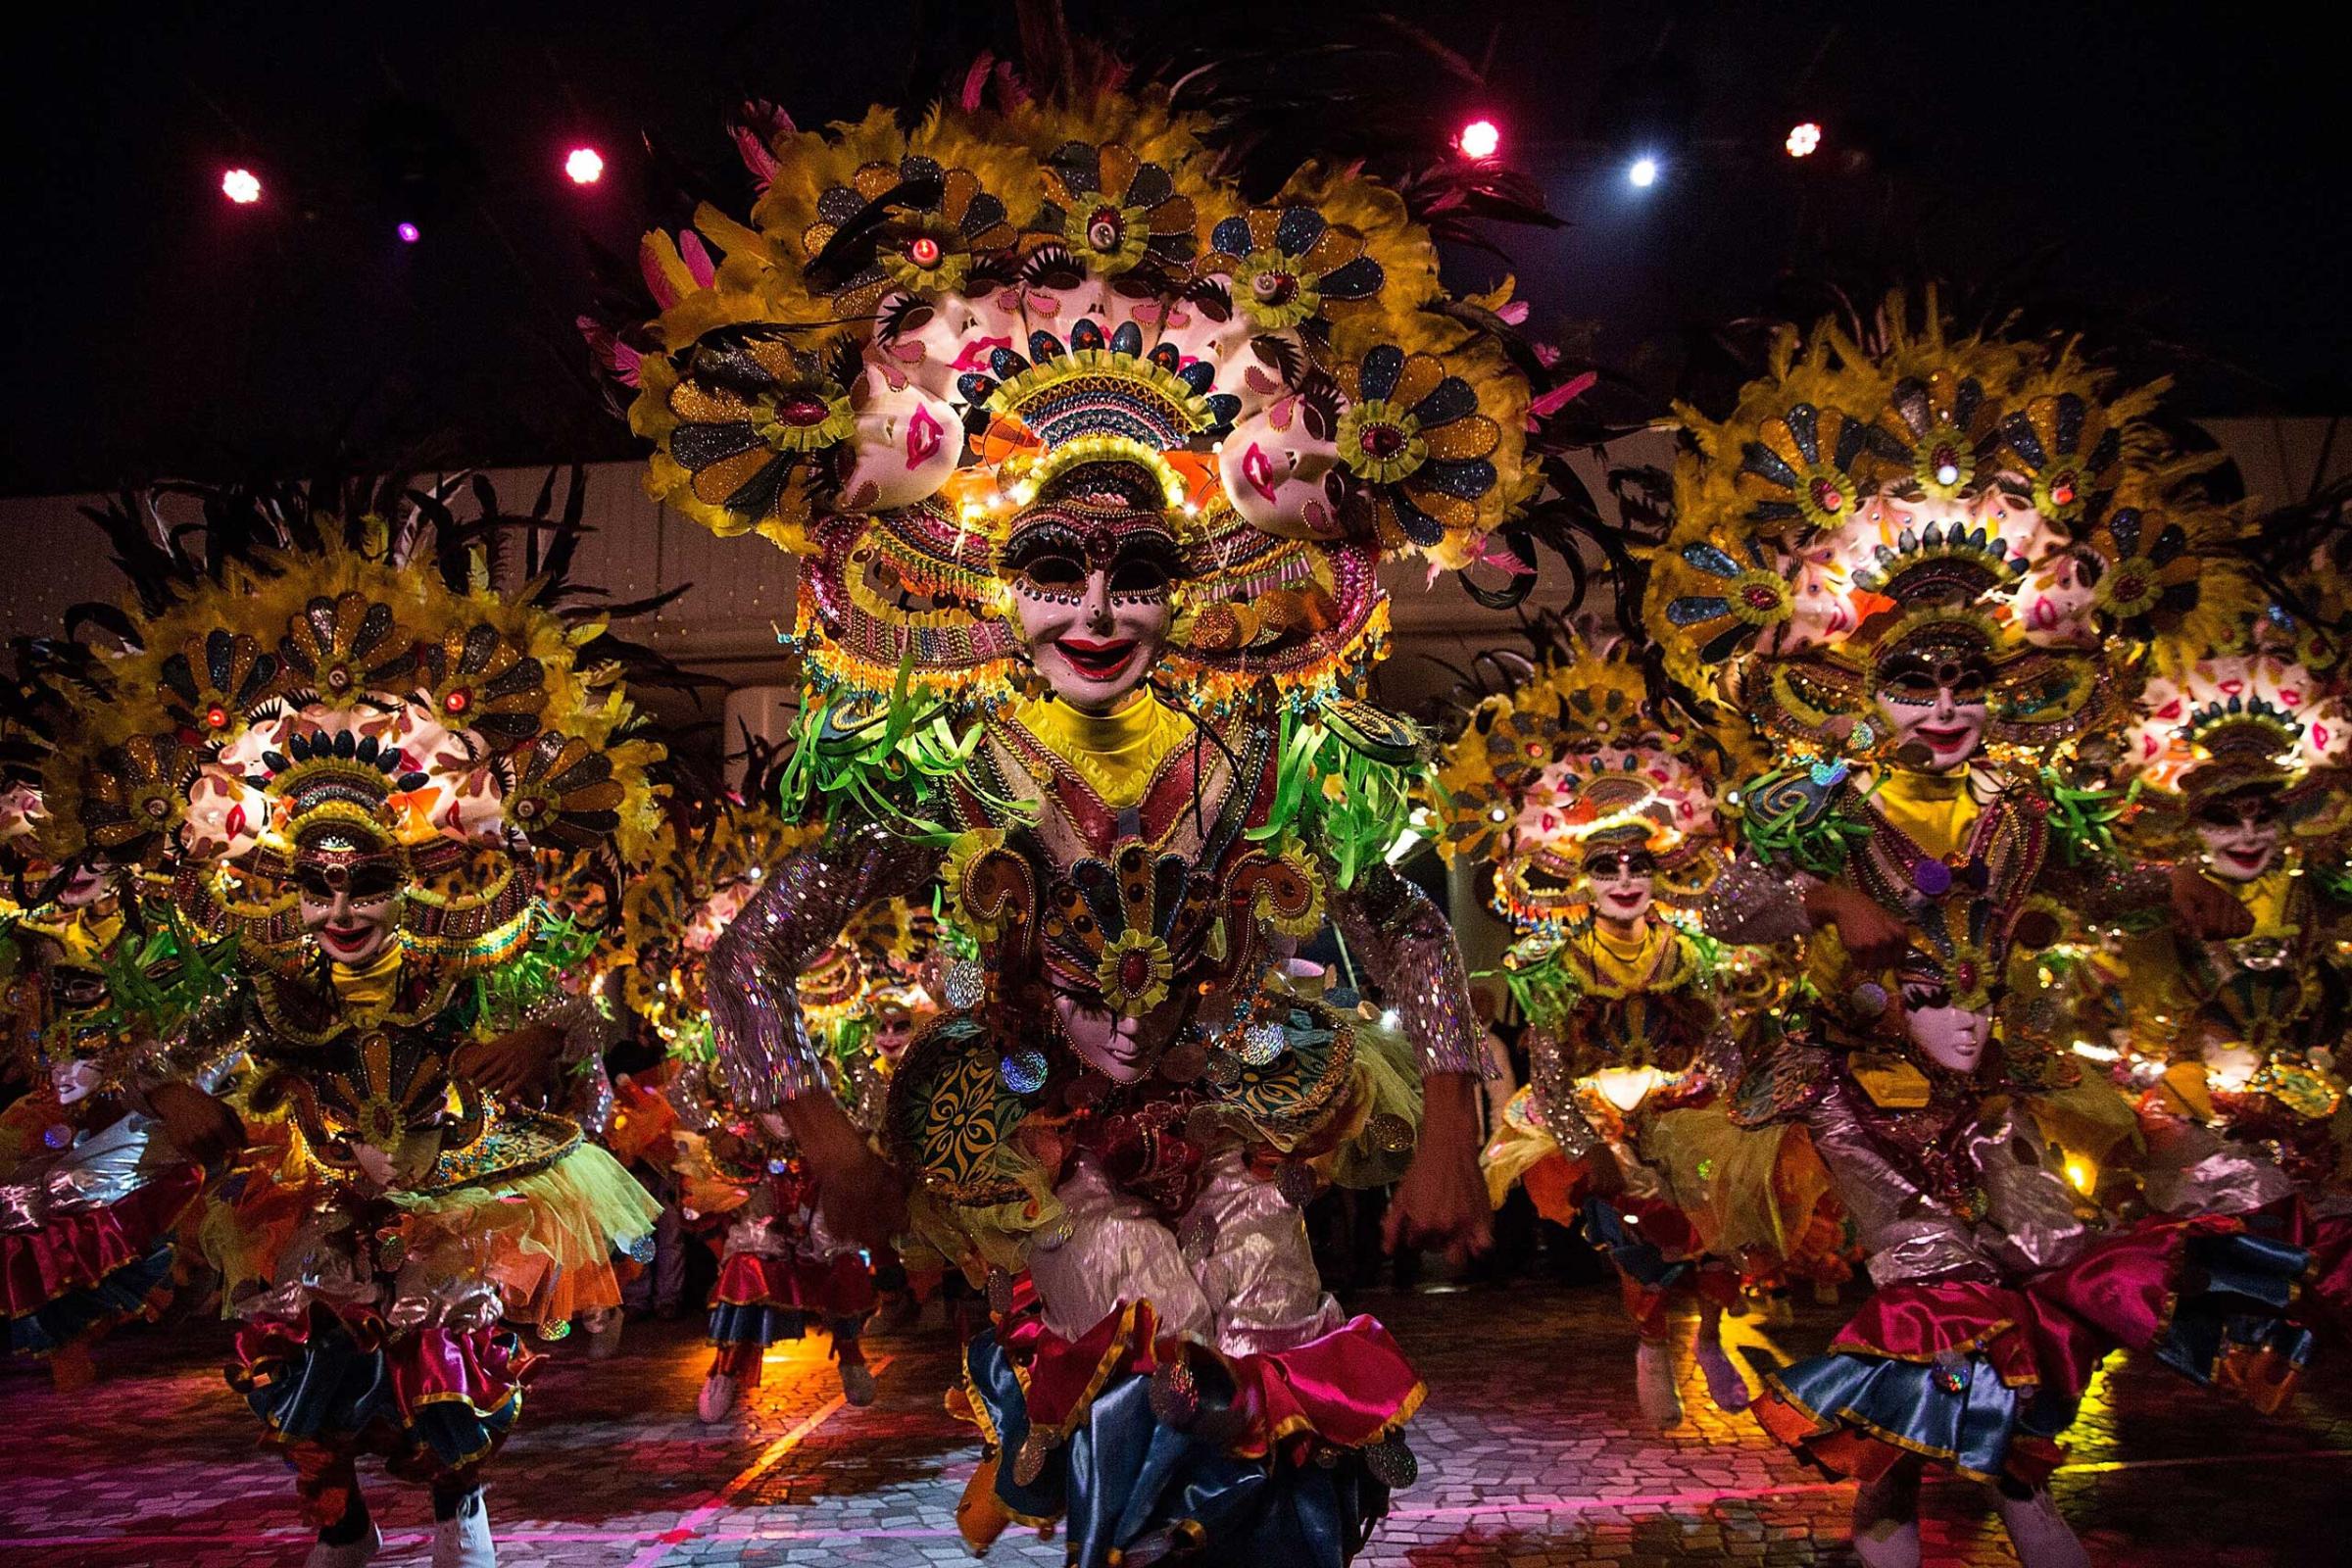 Performers dance at the 2015 Cathay Pacific International Chinese New Year Night Parade on Feb.19, 2015 in Hong Kong, Hong Kong.